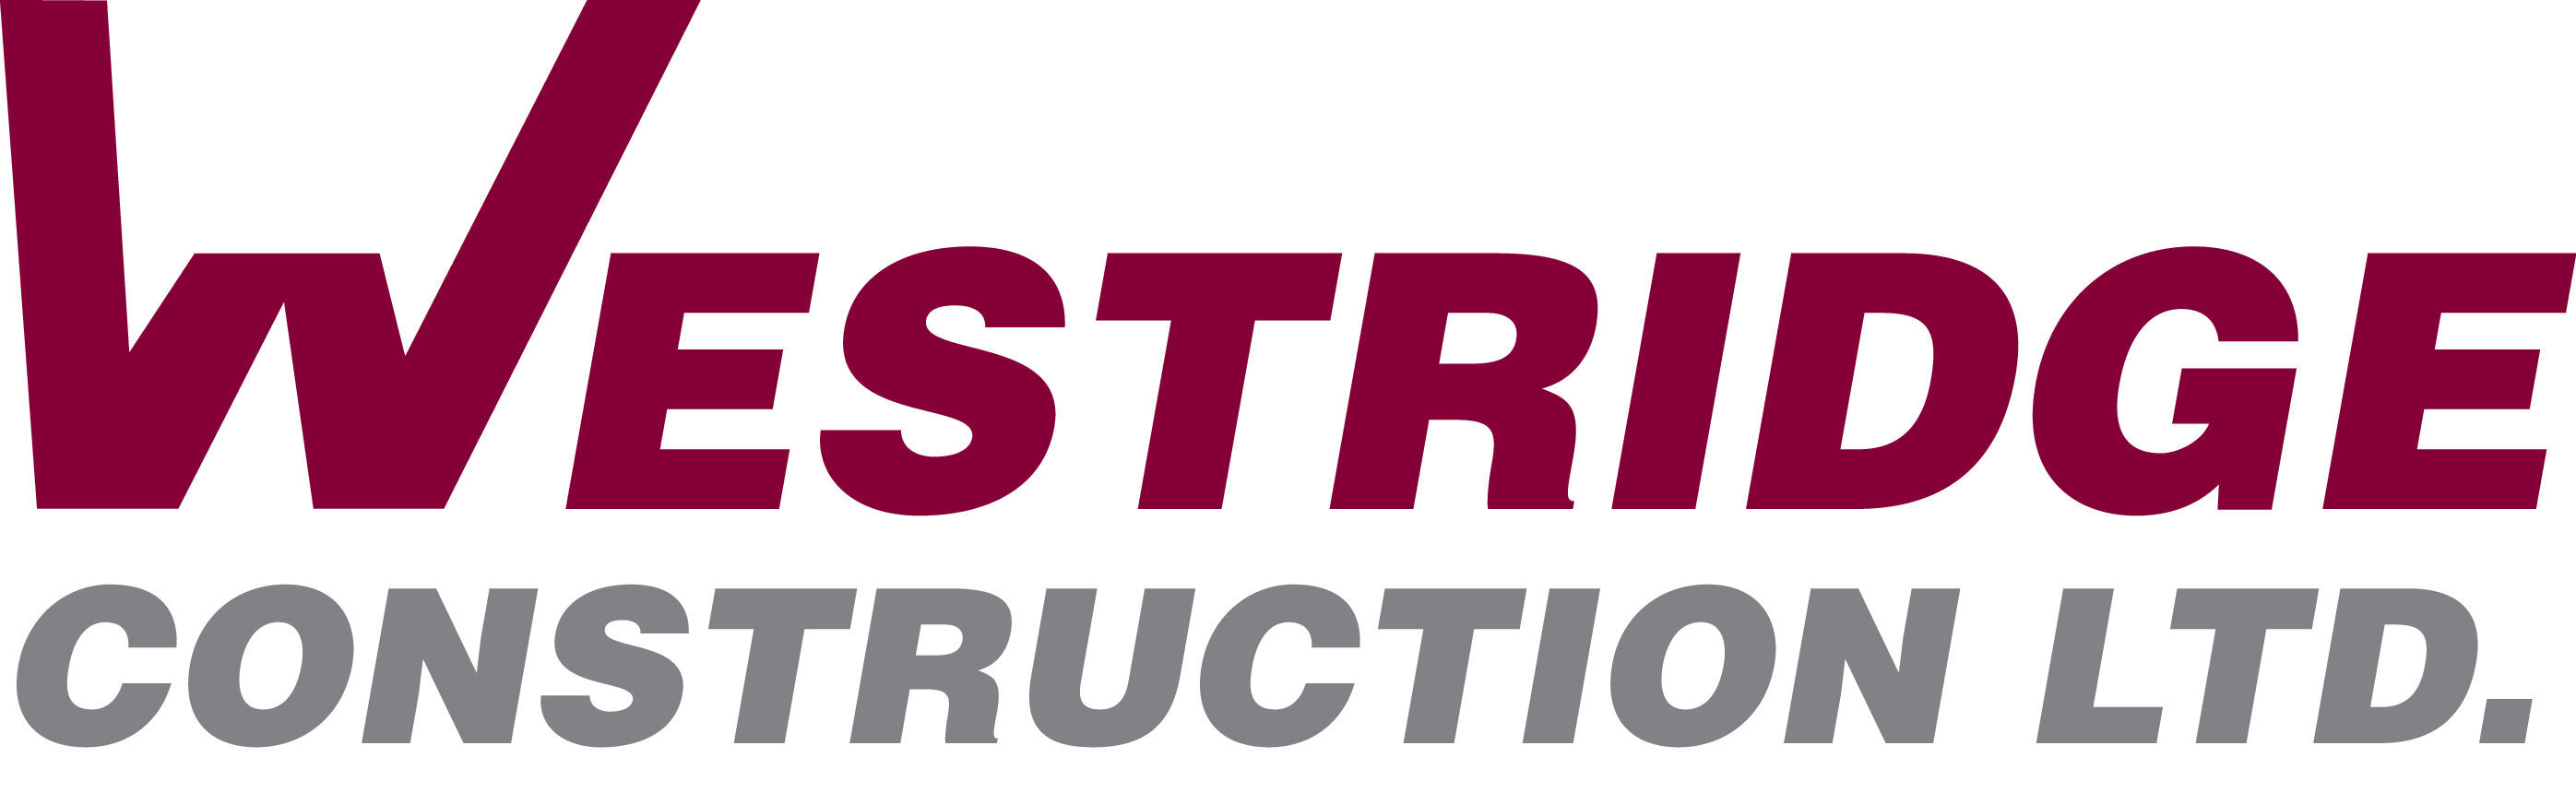 Westridge Construction Ltd.